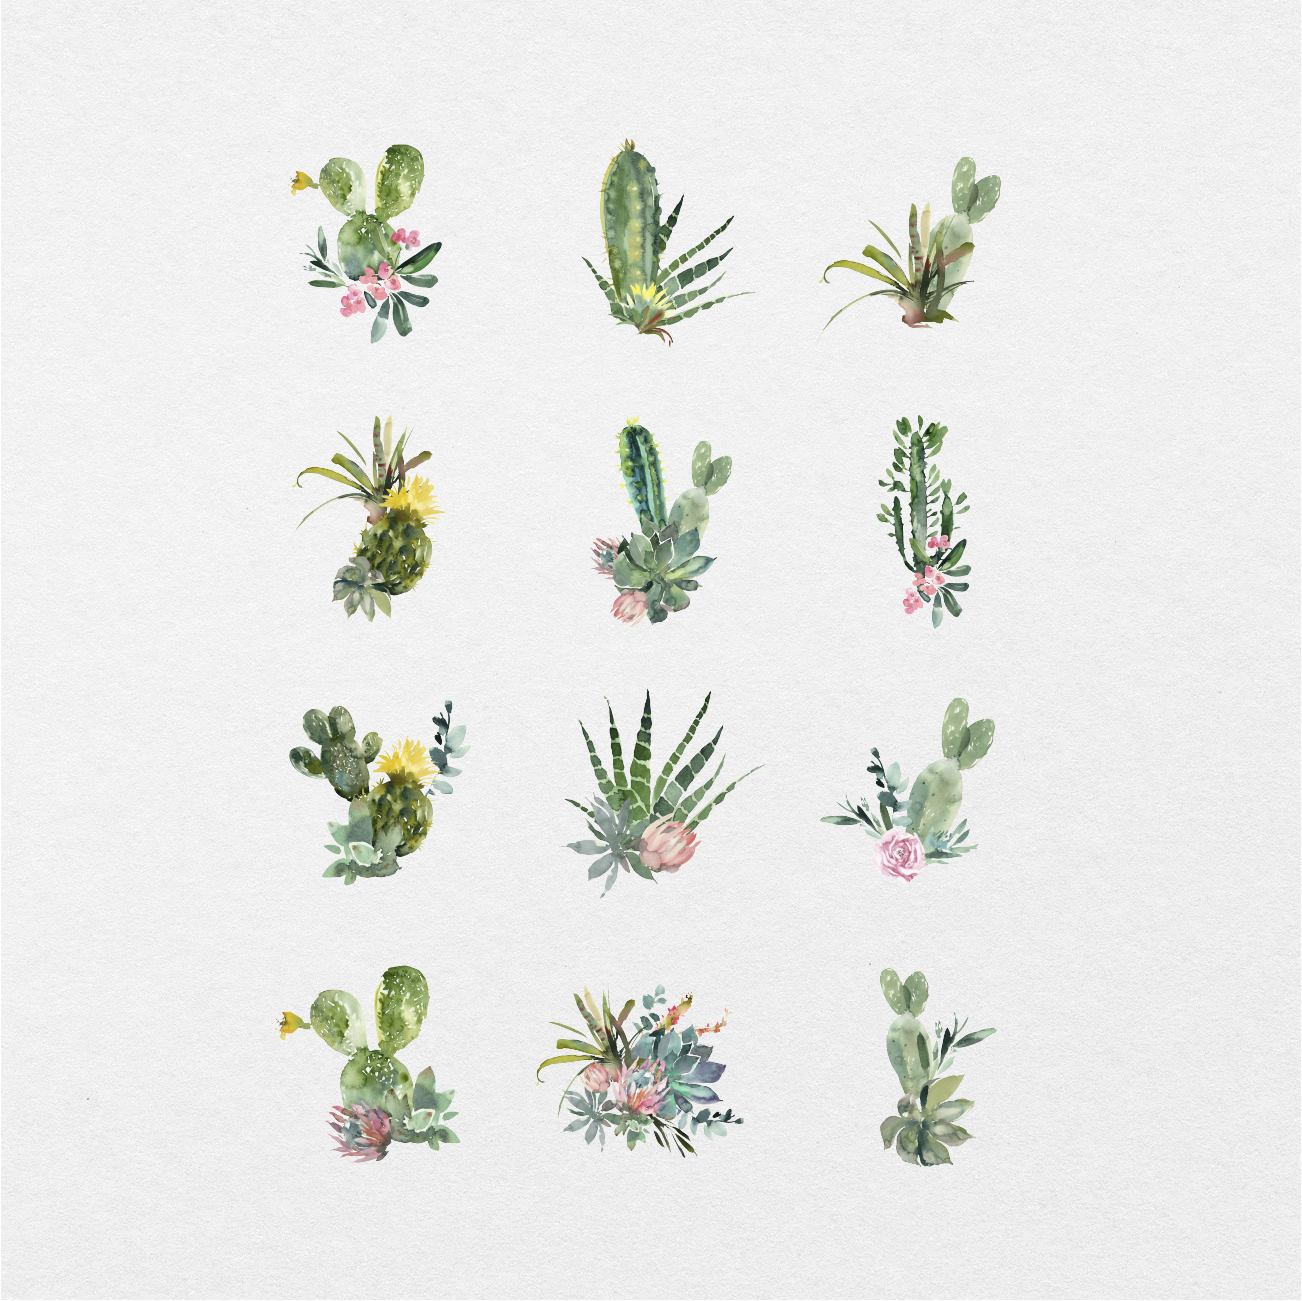 102 Digital Adorable Cactus Plant Sticker Bundle - Stationery Pal